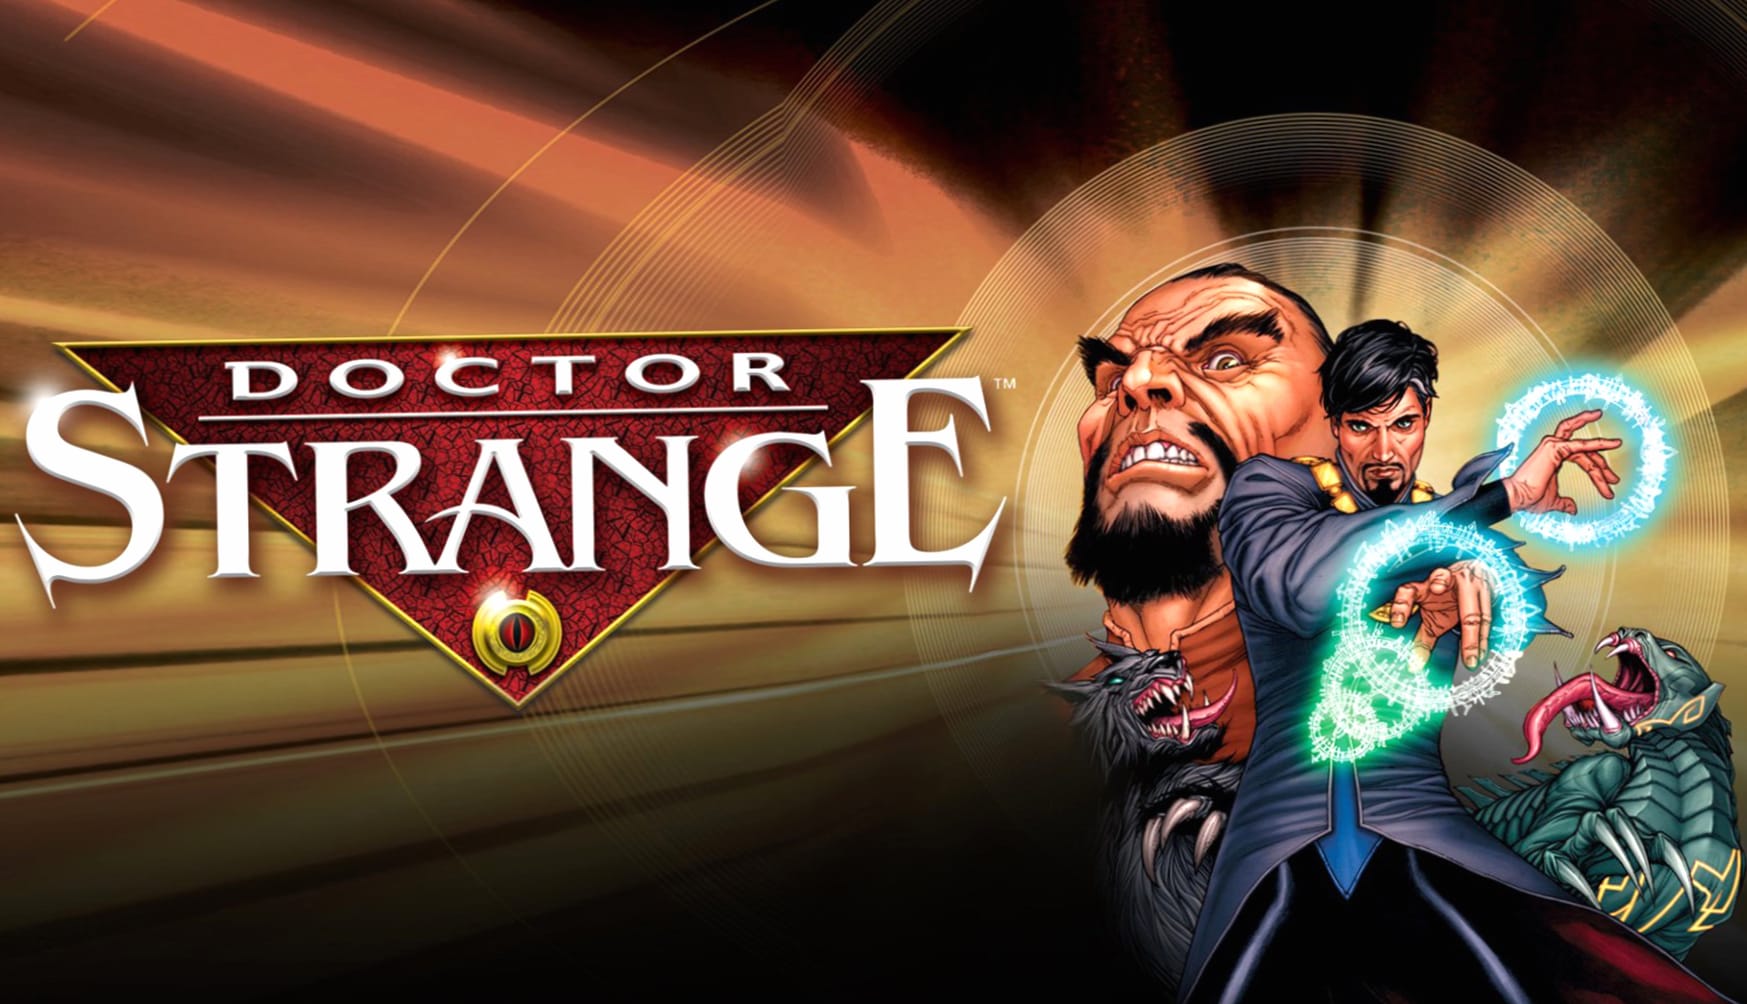 Doctor Strange The Sorcerer Supreme wallpapers HD quality